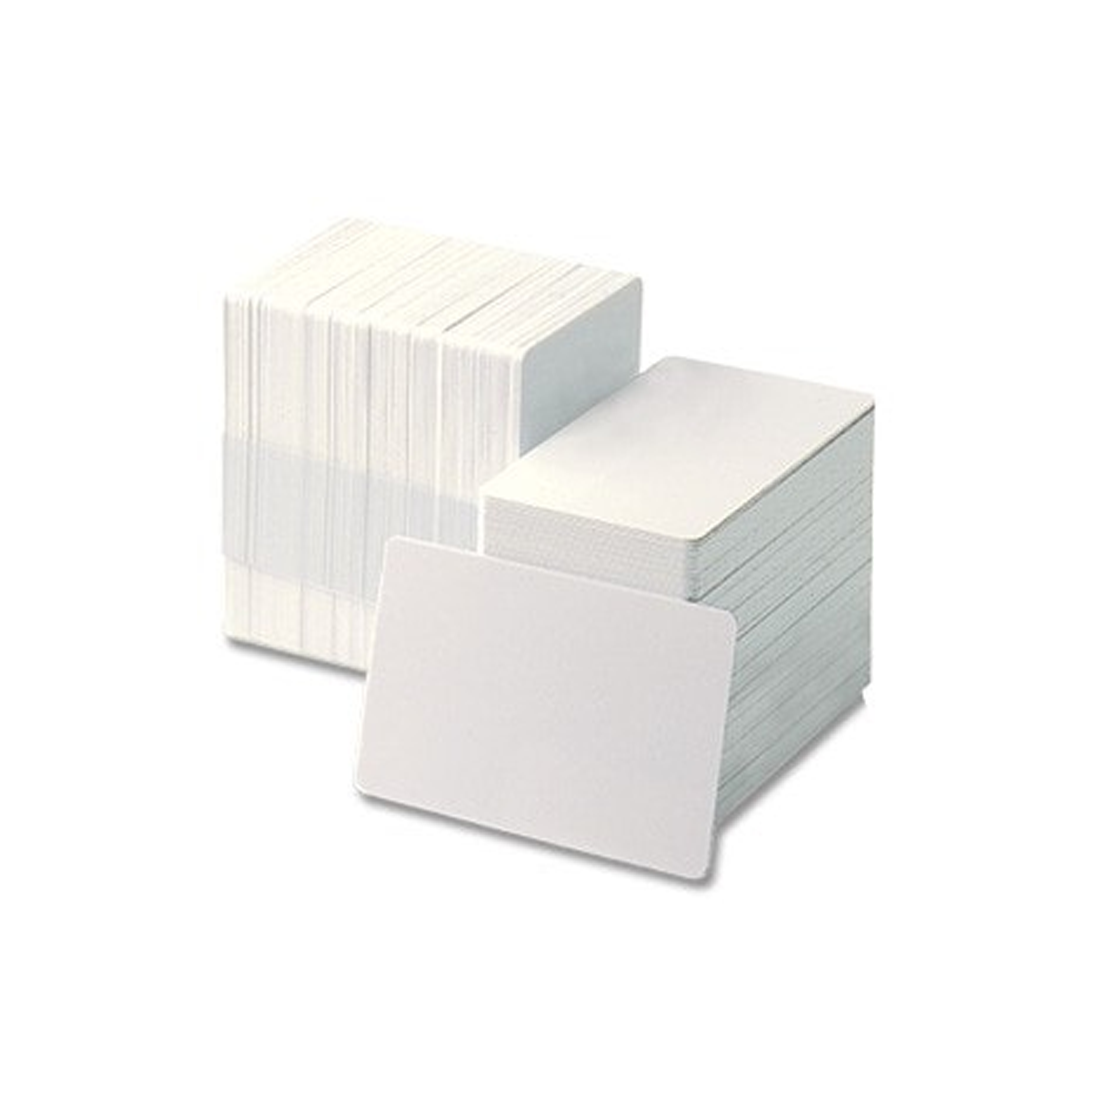 vervolging Fascinerend Masaccio Witte blanco plastic pasjes (500 stuks) - Card Supply Nederland